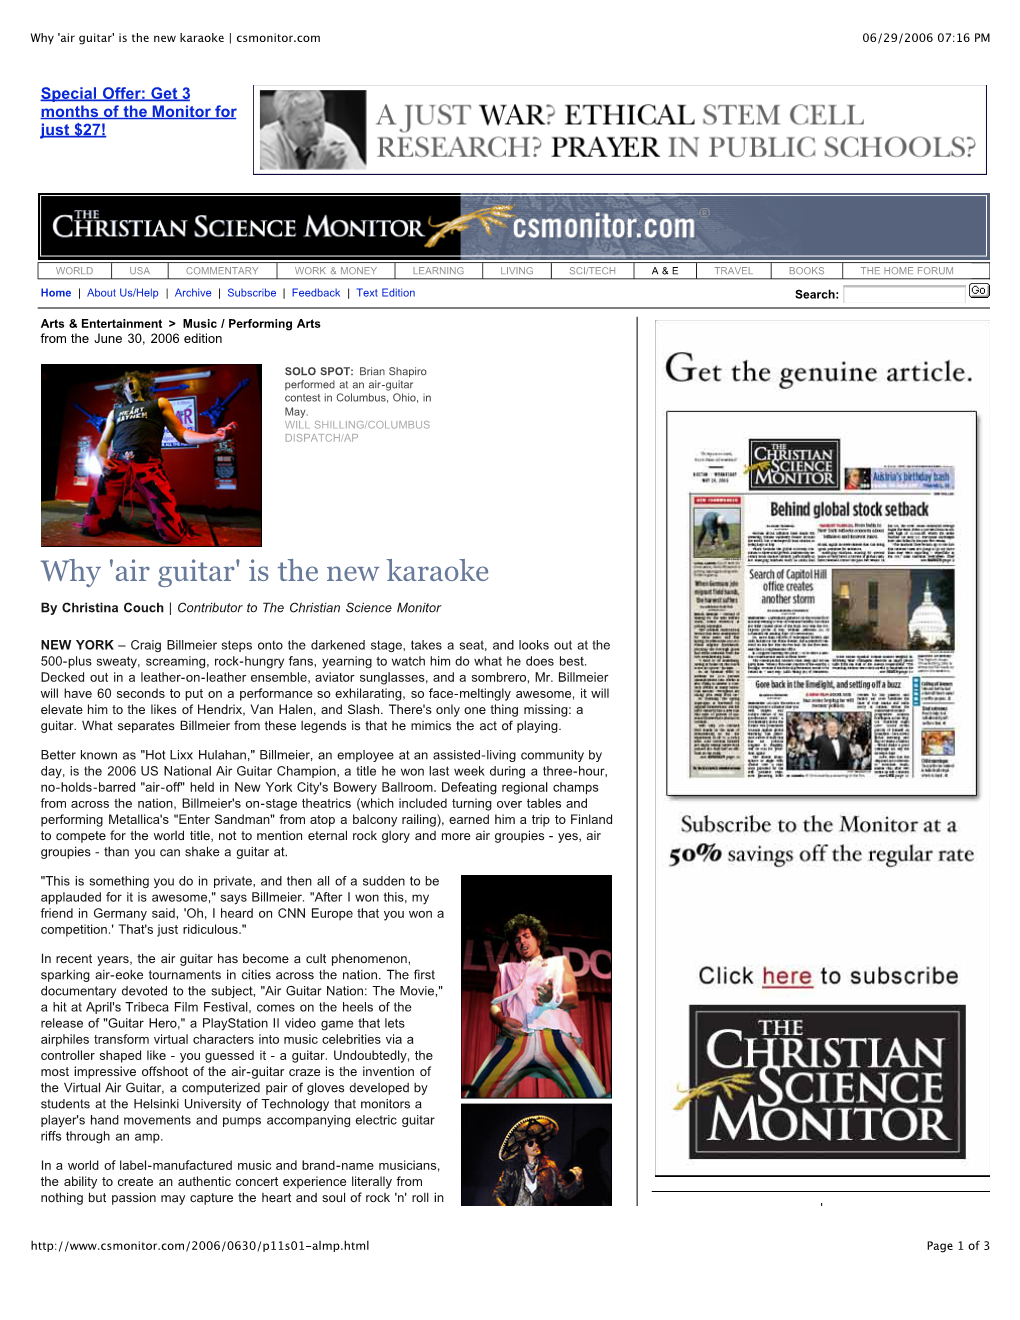 Why 'Air Guitar' Is the New Karaoke | Csmonitor.Com 06/29/2006 07:16 PM